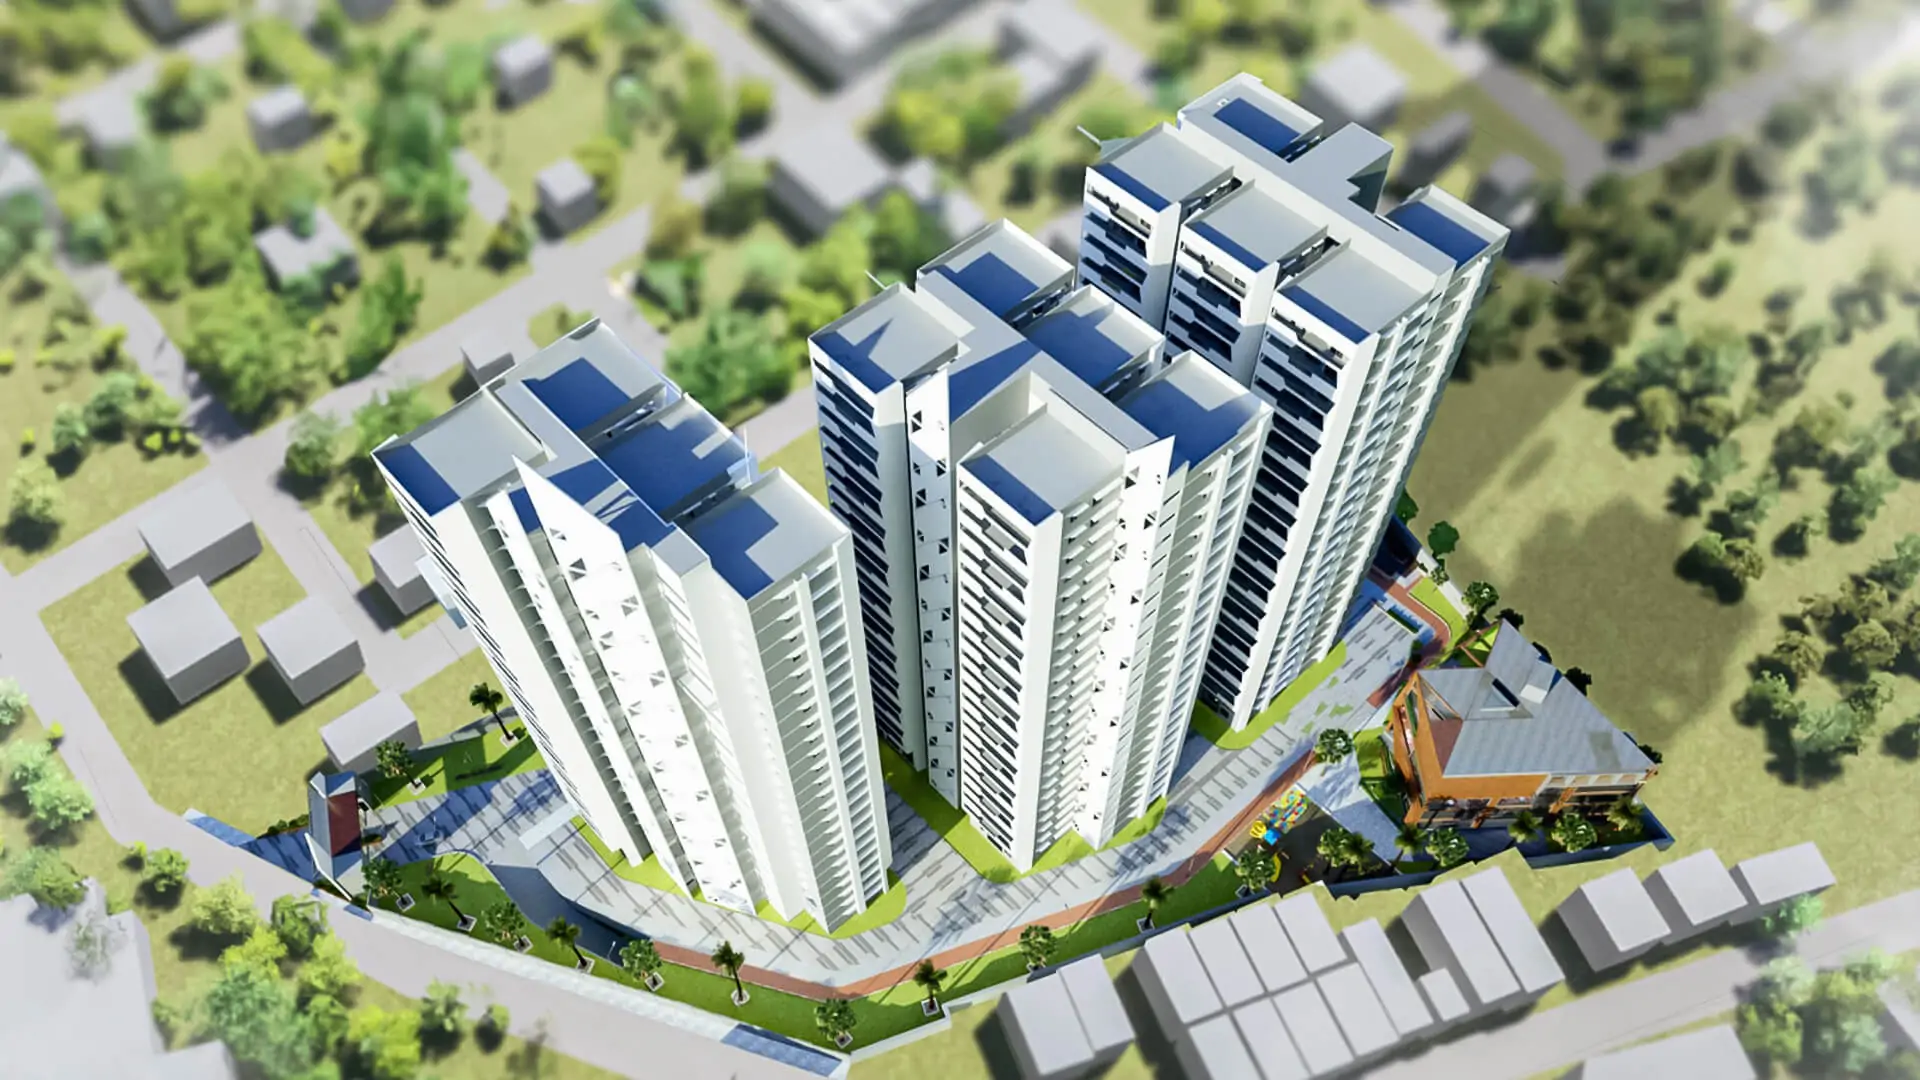 Residential Space for Sale | Hyderabad Real Estate Developer: Namishree